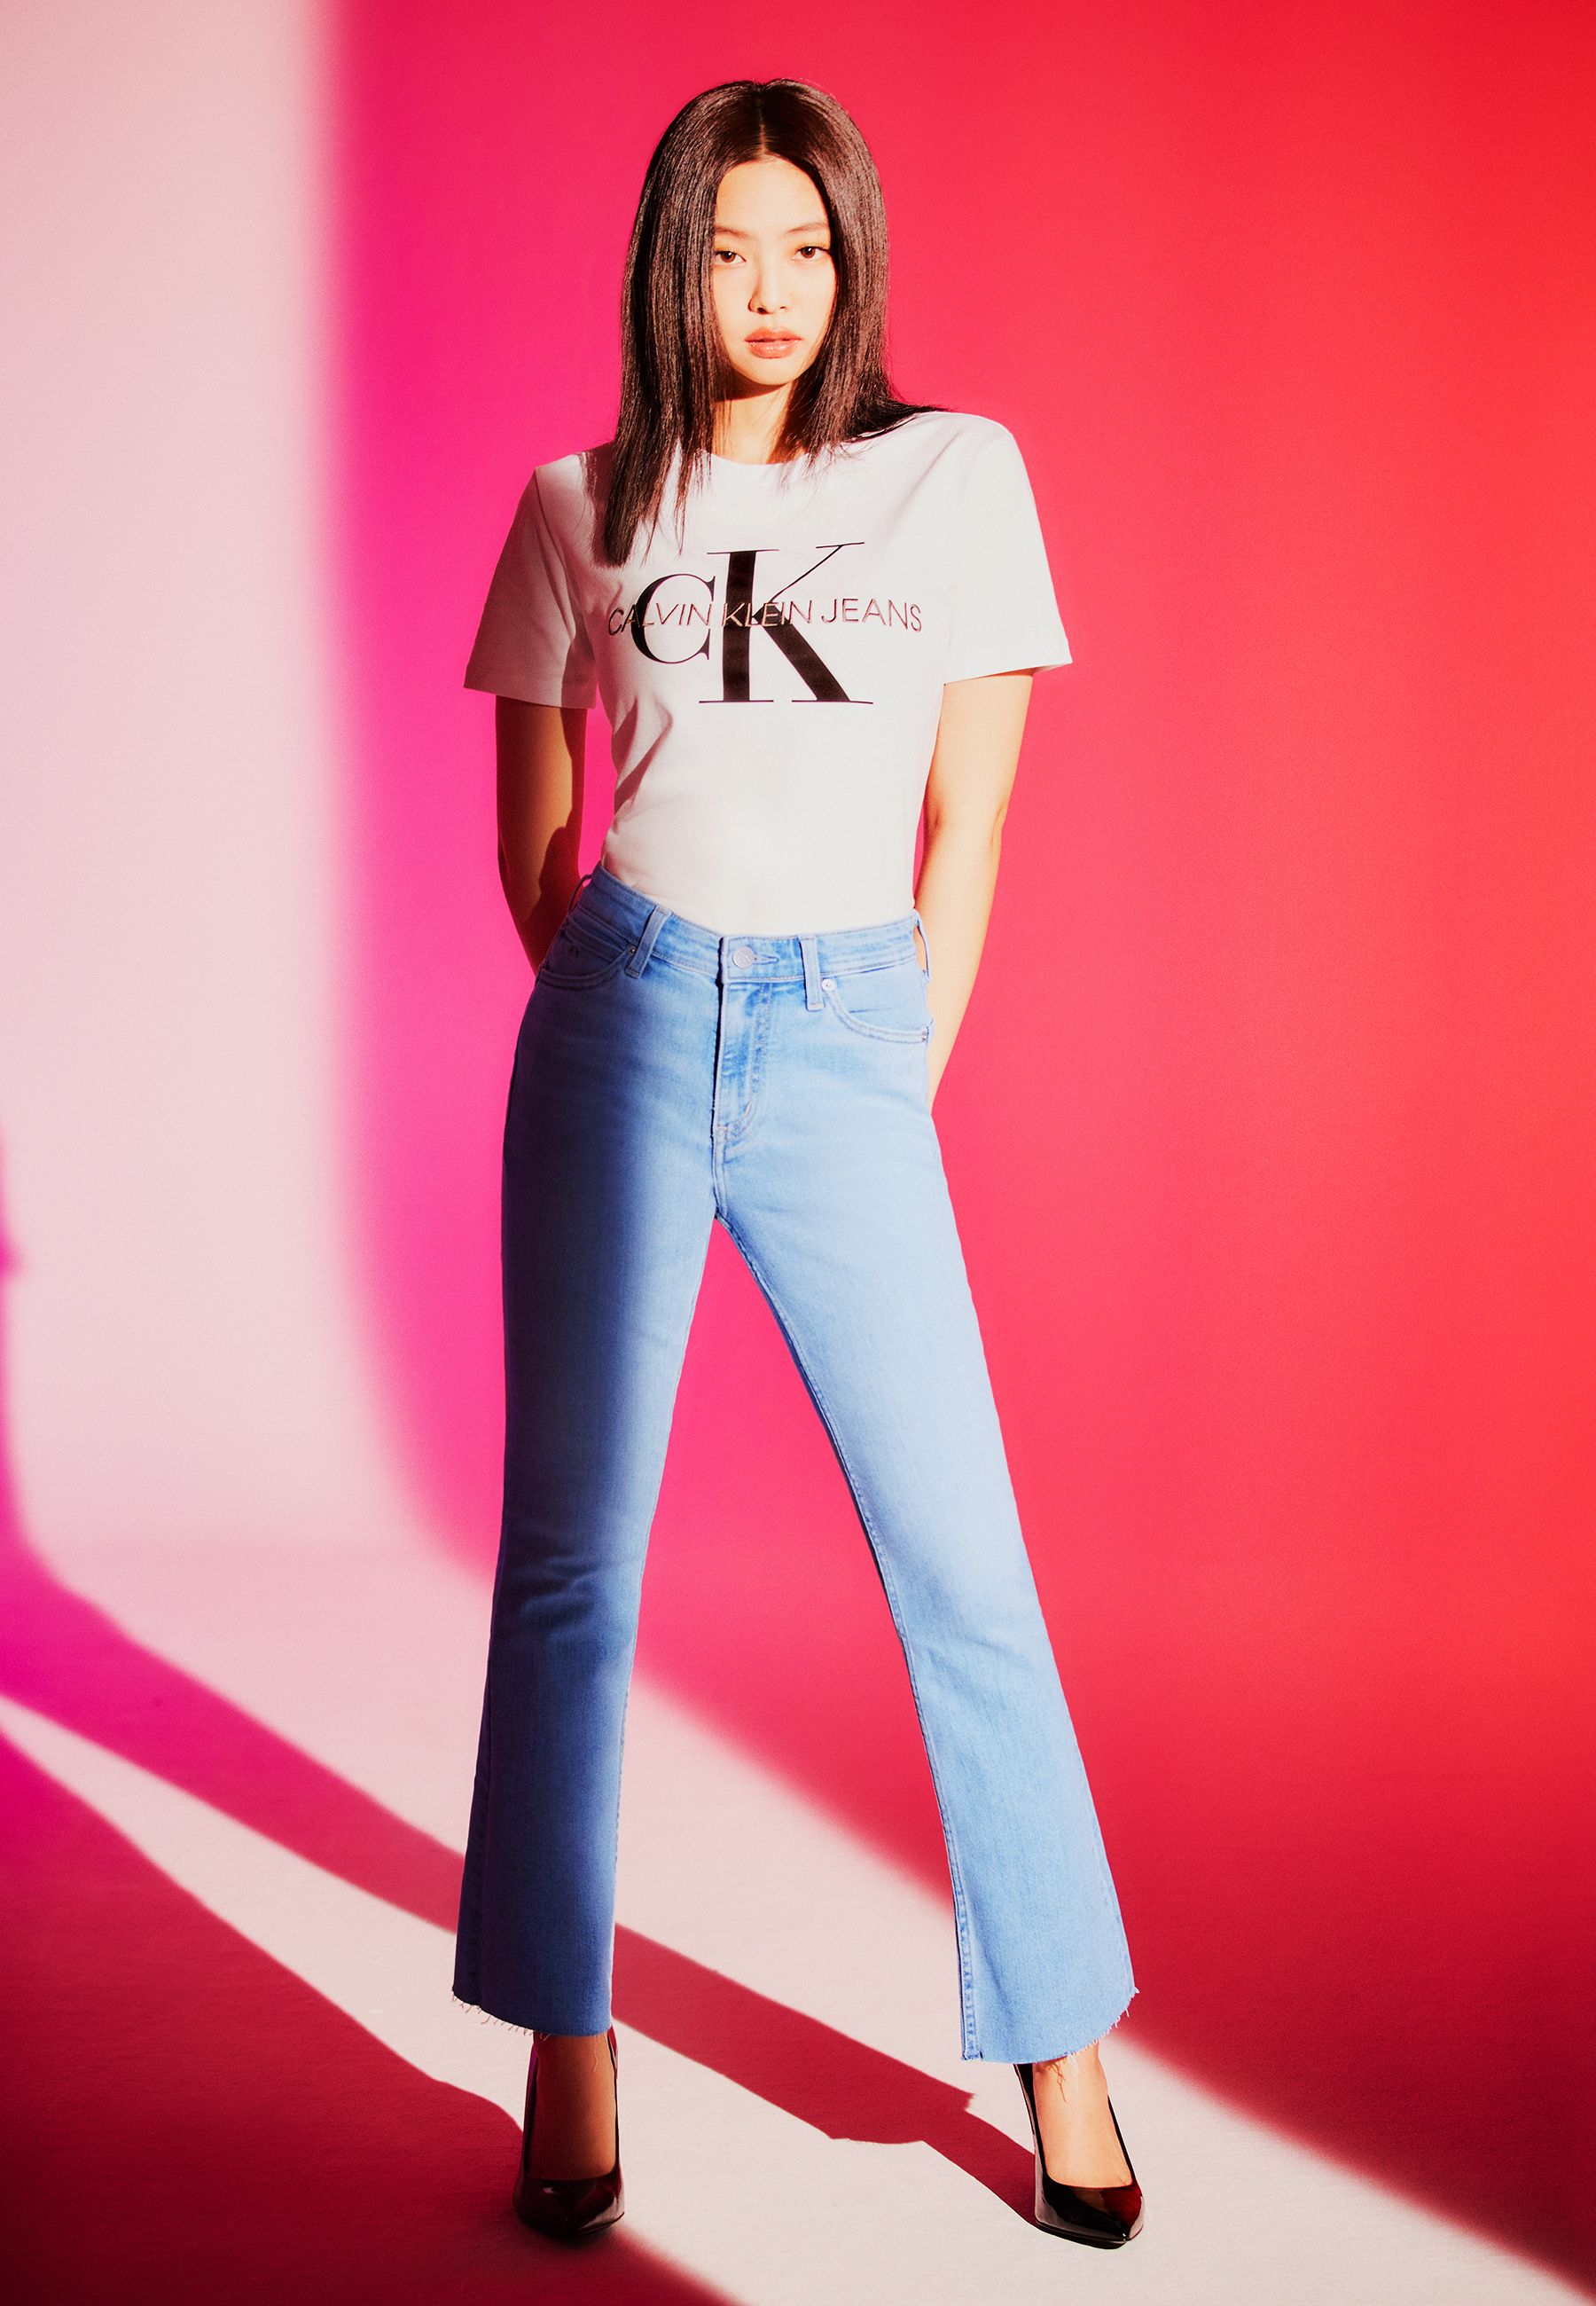 Jennie for Calvin Klein Jeans - Black Pink Photo (43268347) - Fanpop